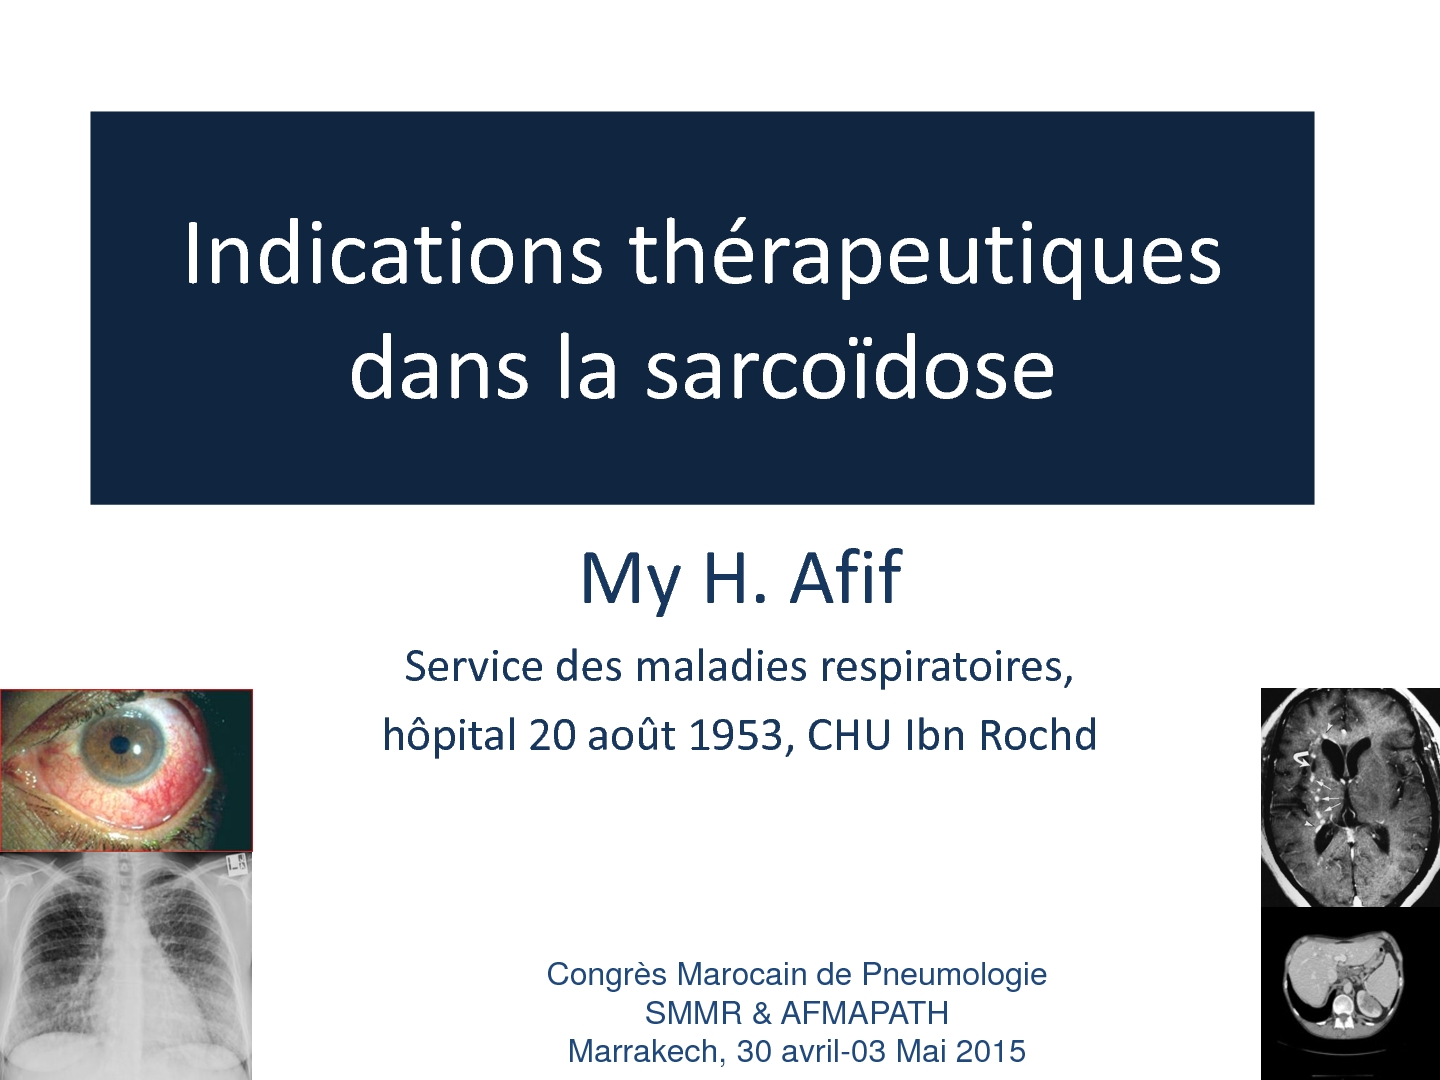 Indications thérapeutiques dans la sarcoïdose. H. AFIF